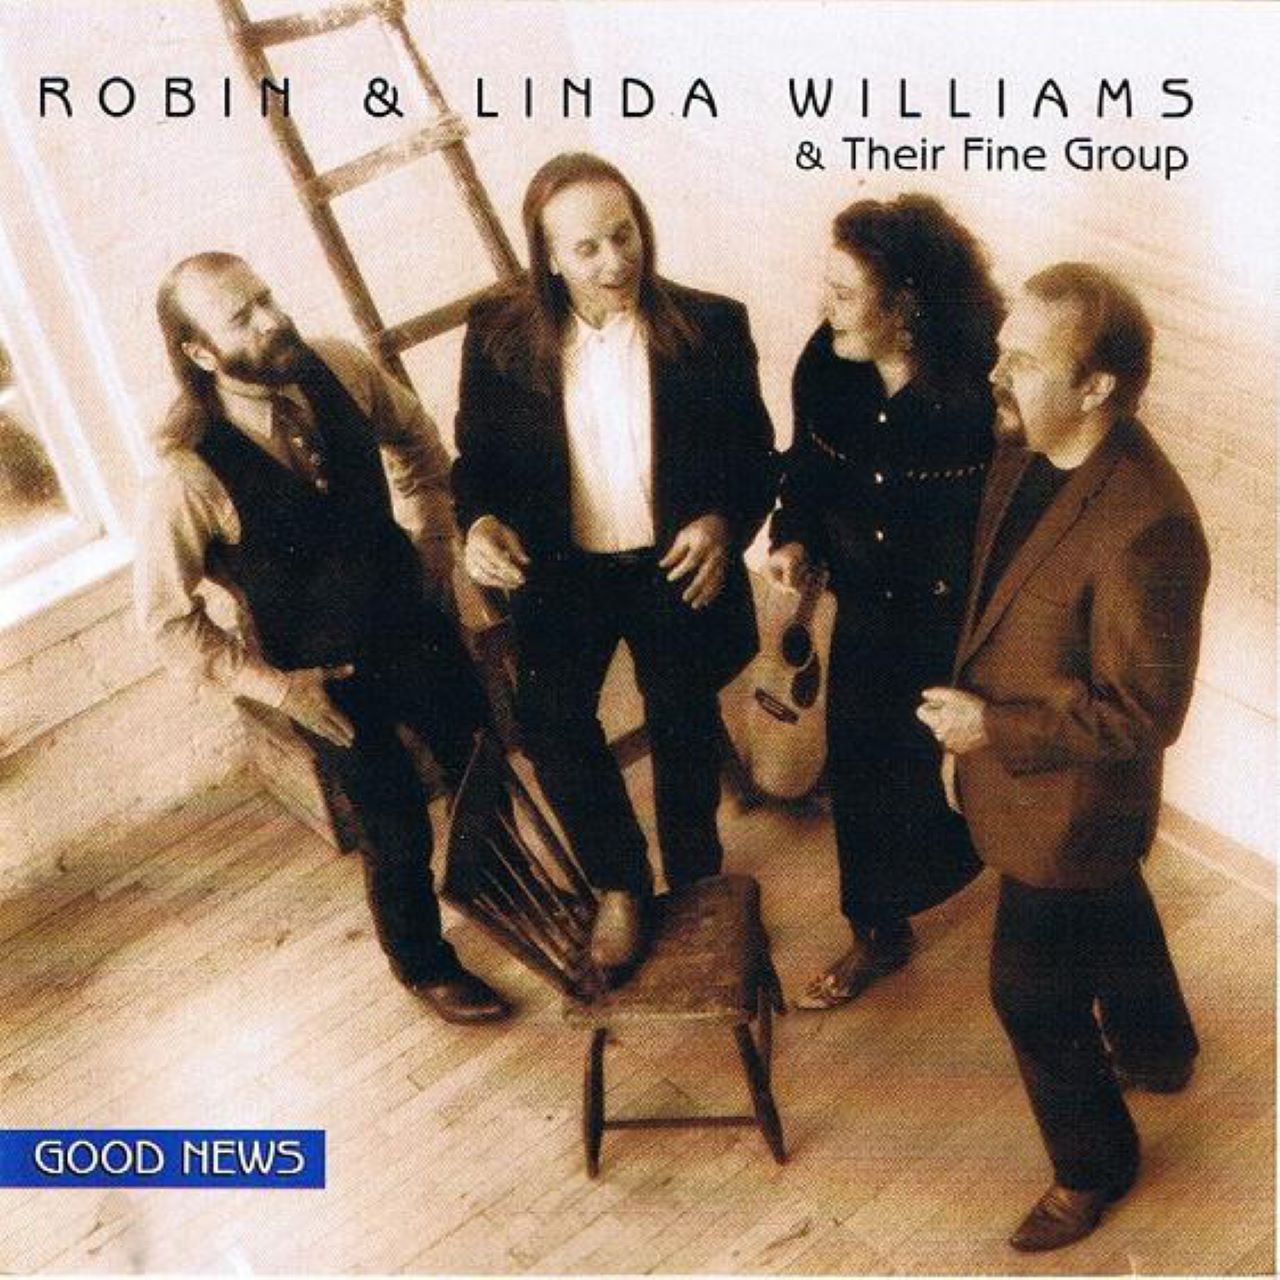 Robin & Linda Williams & Their Fine Group - Good News cover album